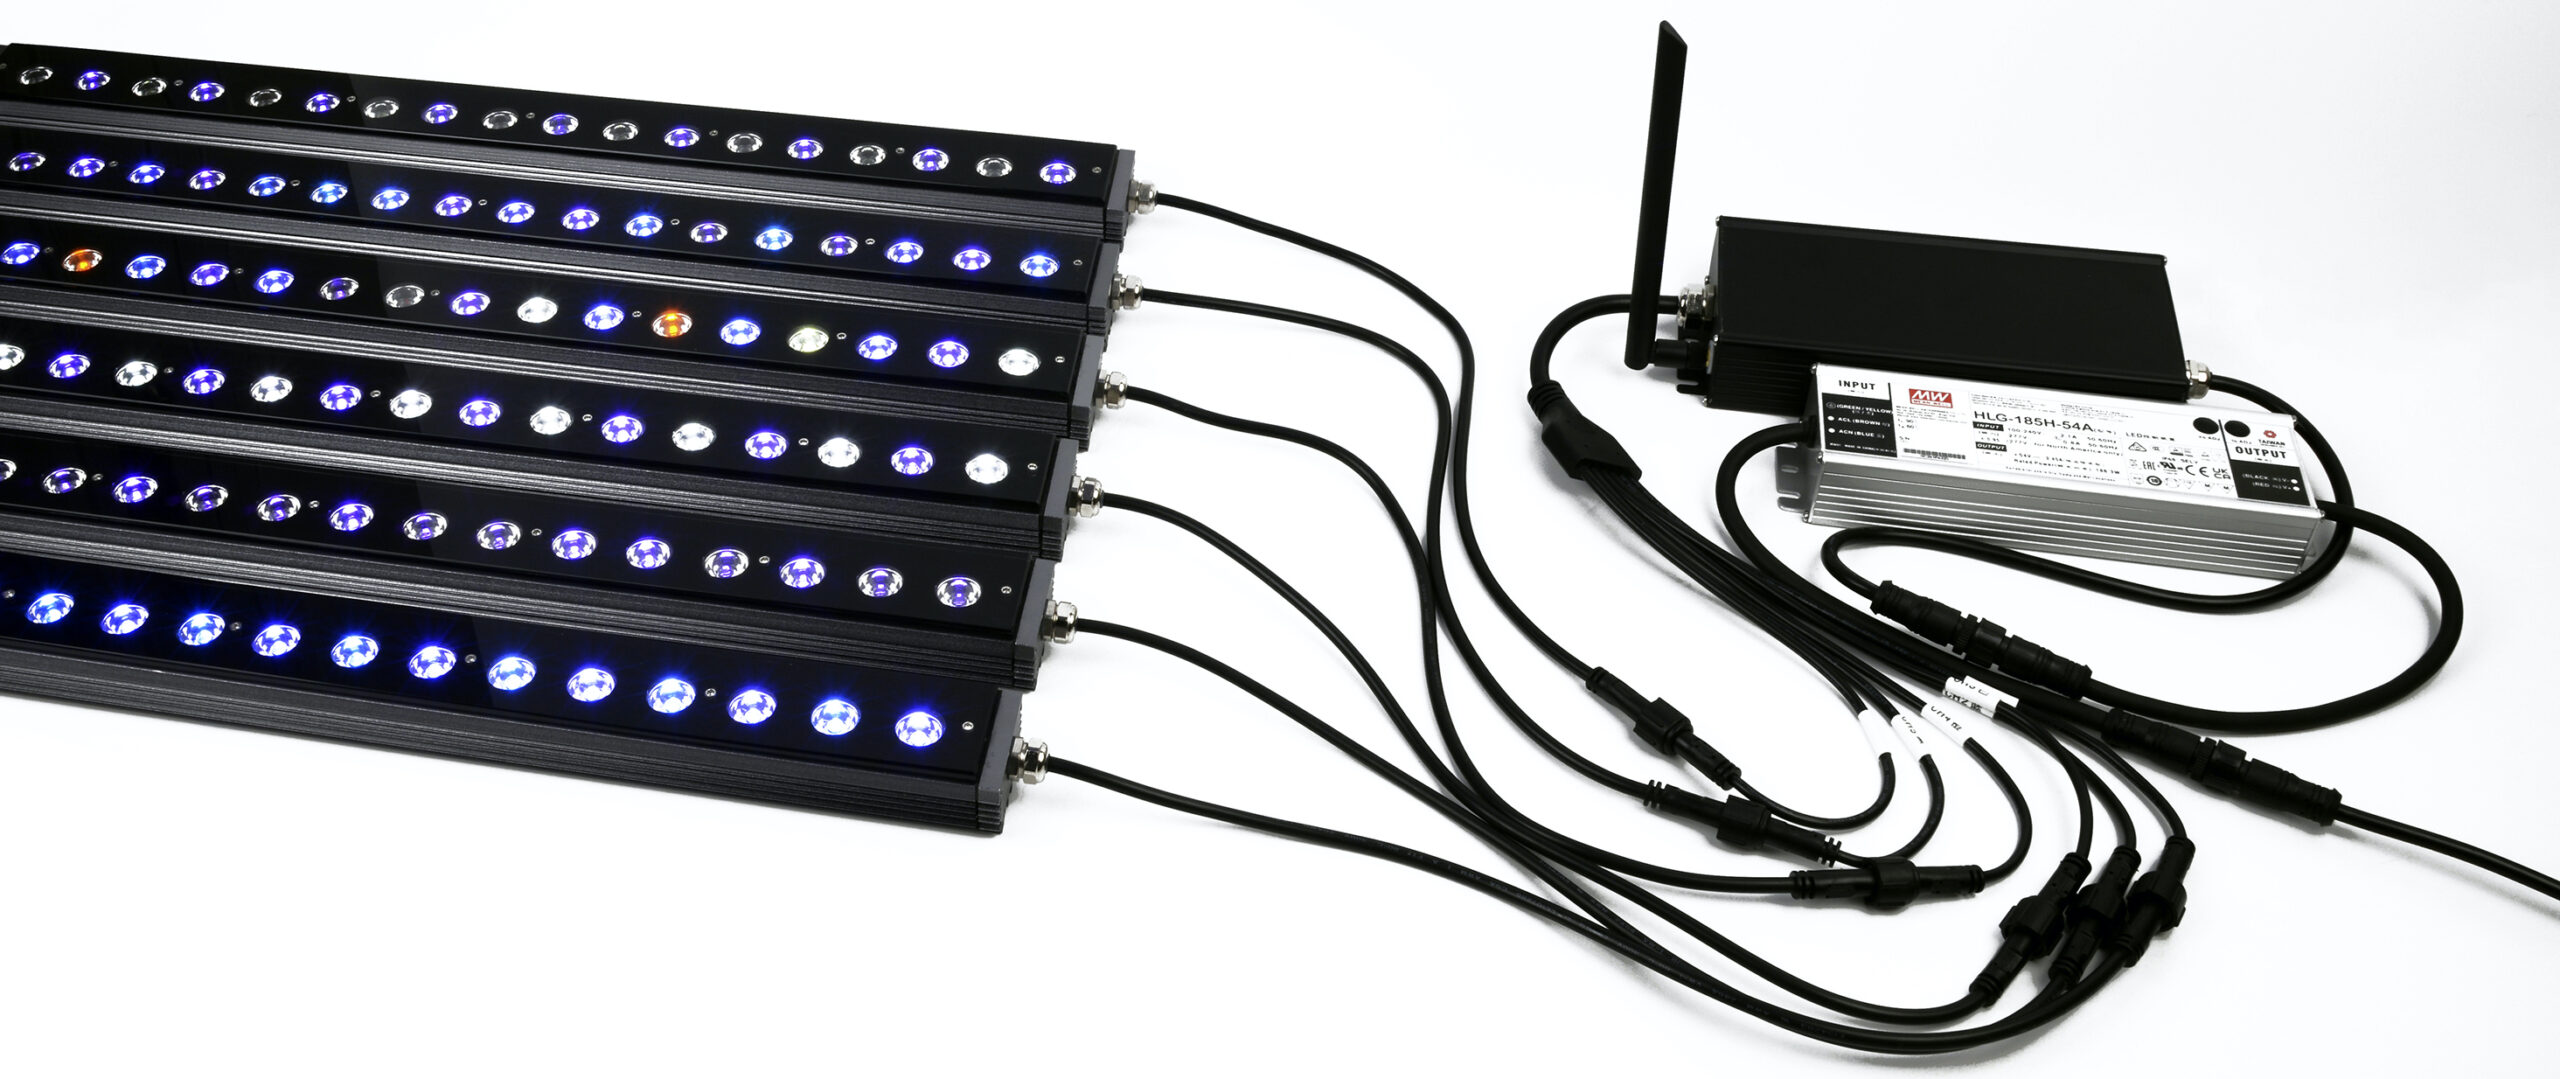 Orphek Osix - Or3 암초 LED 바 컨트롤러